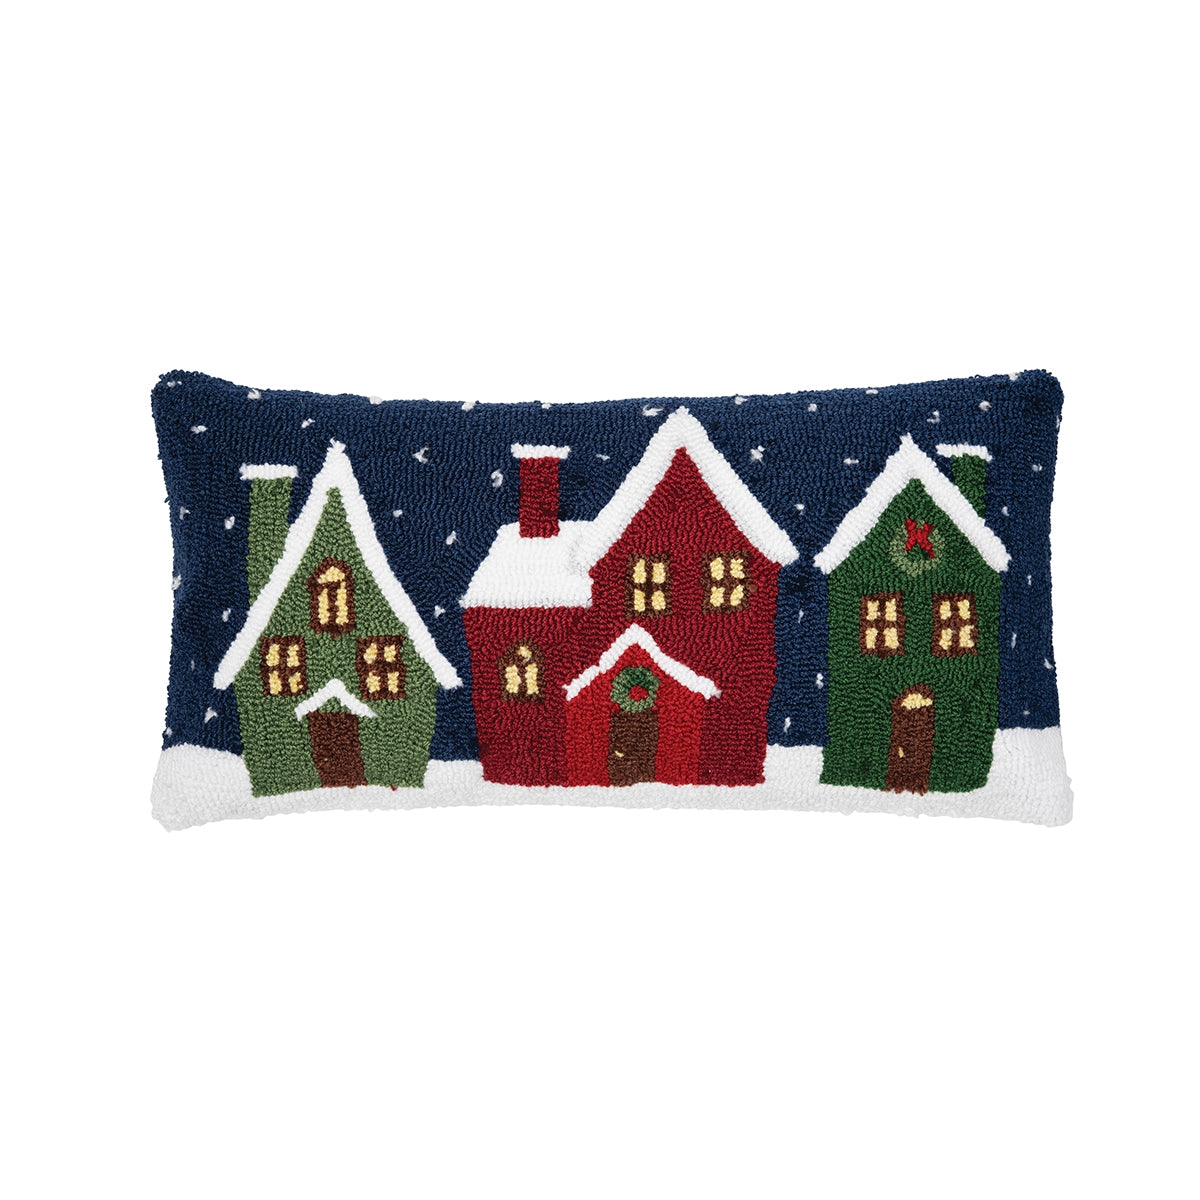 Winter Village Hooked Pillow